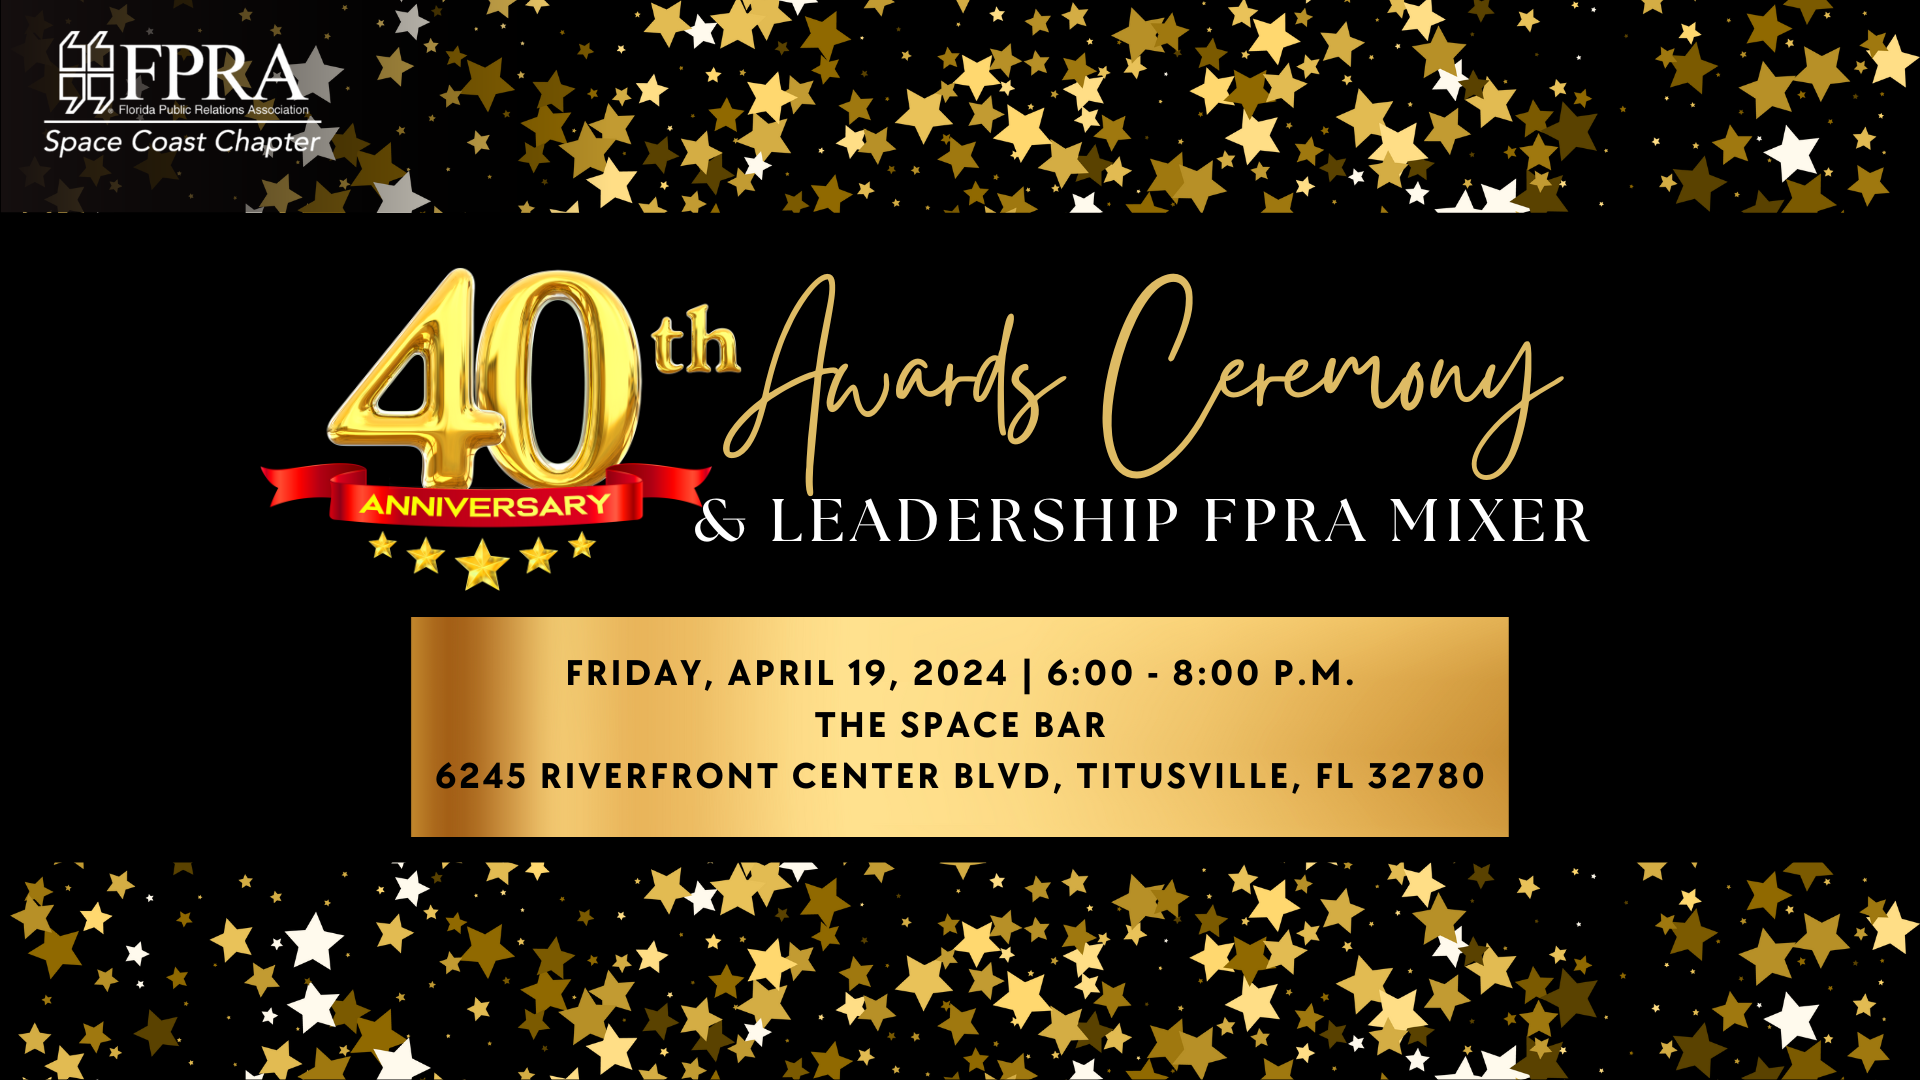 40th Anniversary Awards Ceremony & Leadership FPRA Mixer